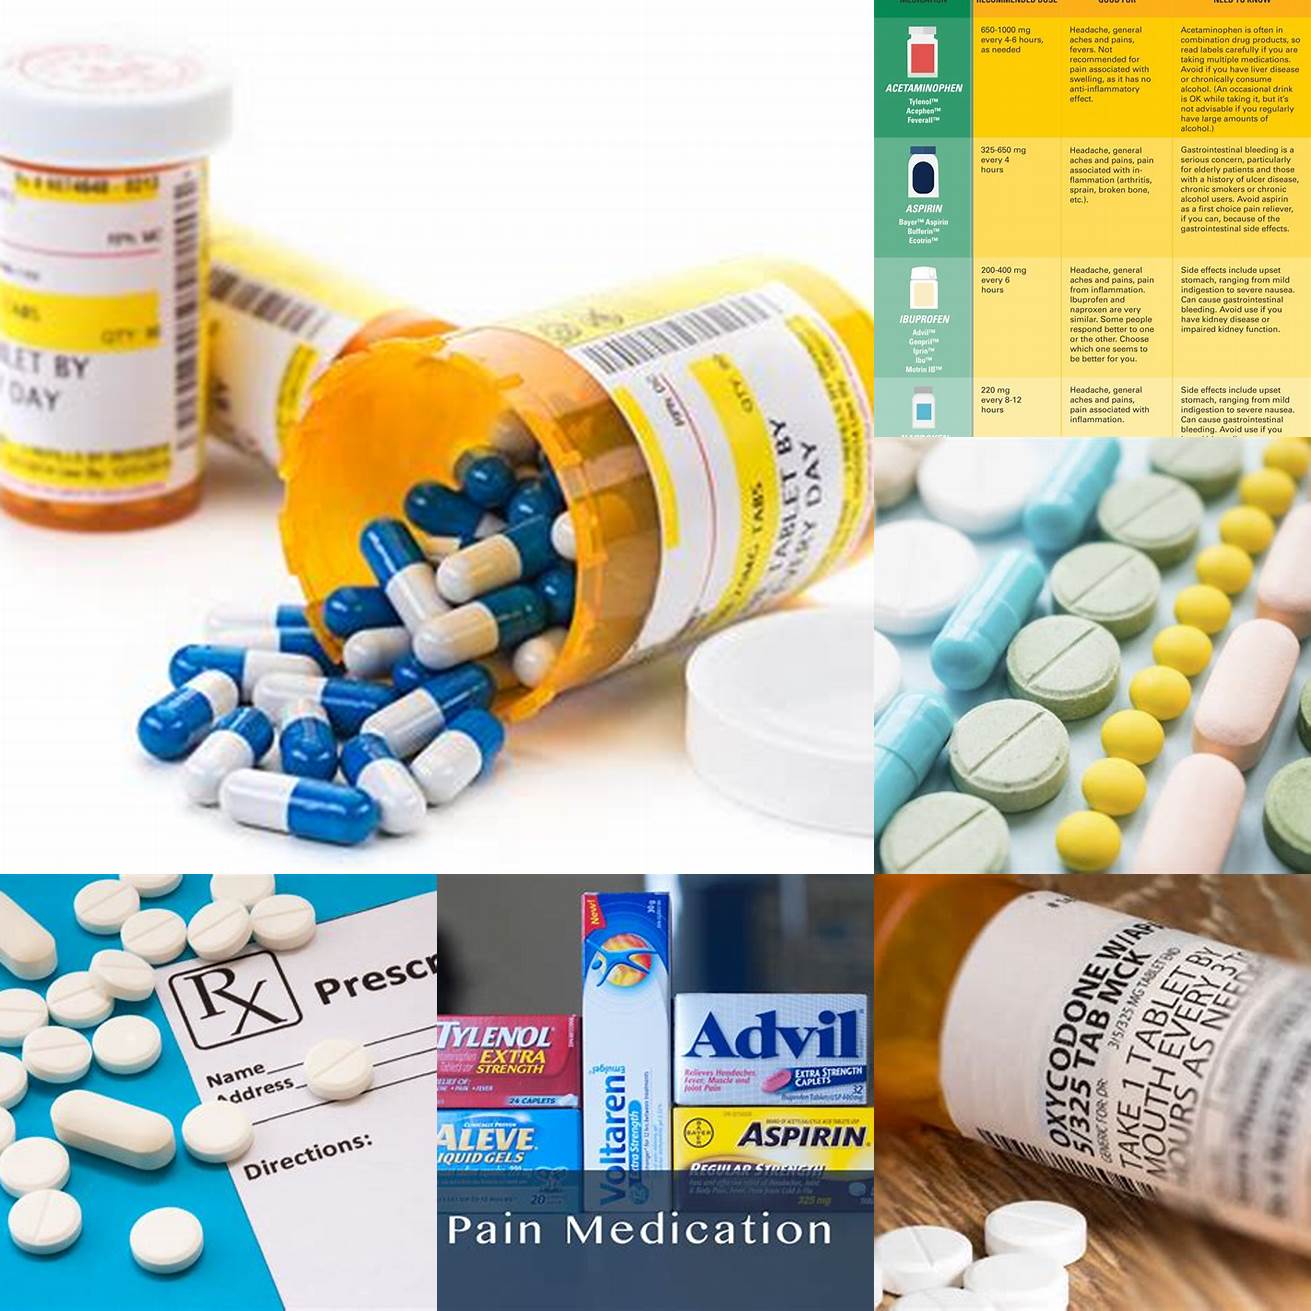 3 Pain medication